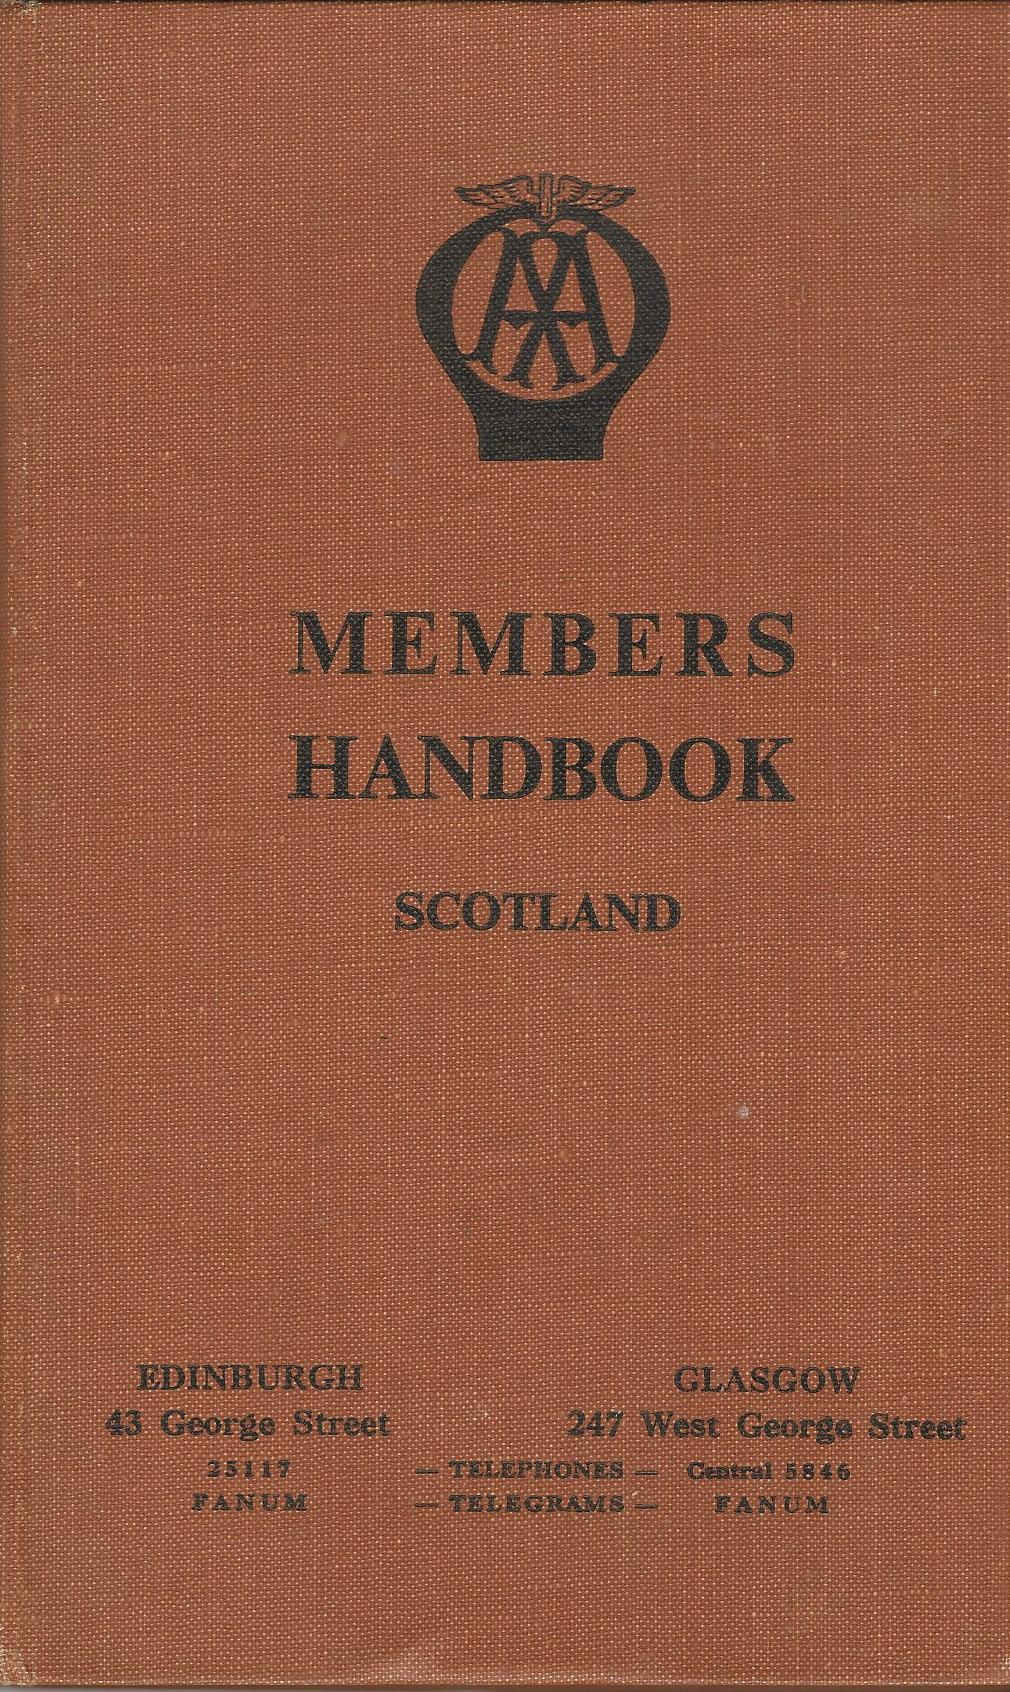 Image for AA Member's Handbook - Scotland - Post War Edition.